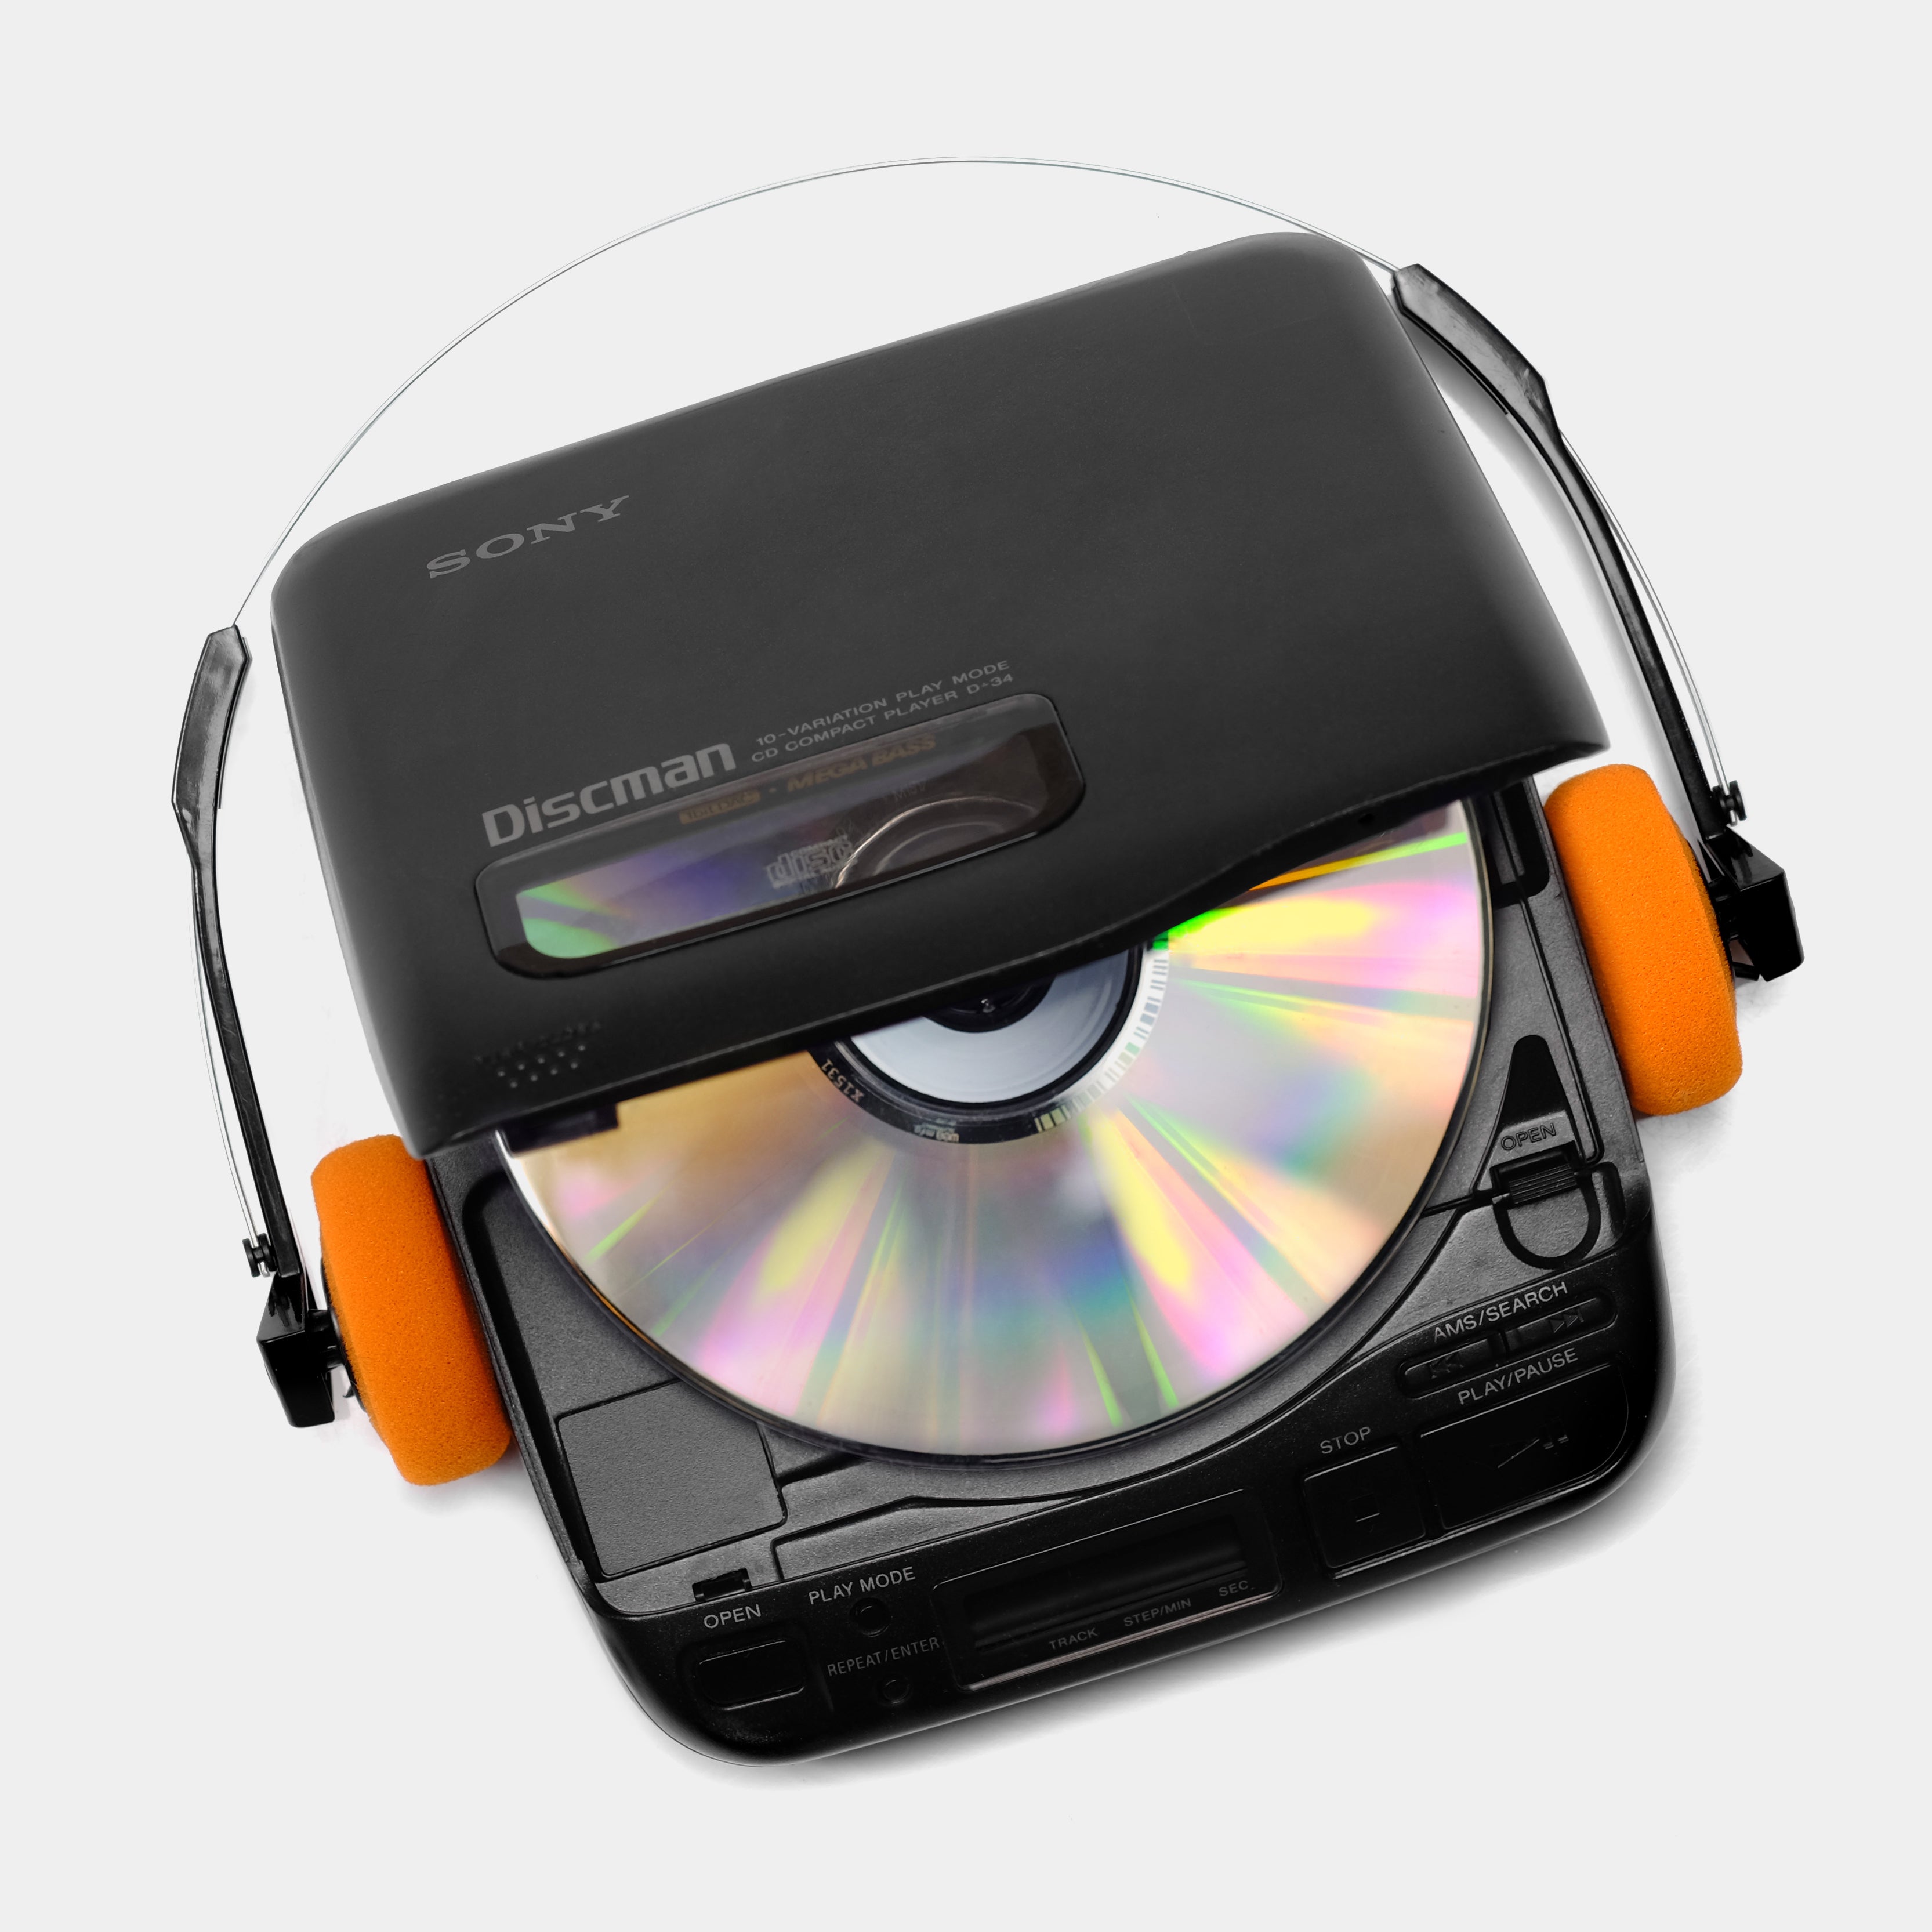 Sony Discman D-34 Portable CD Player